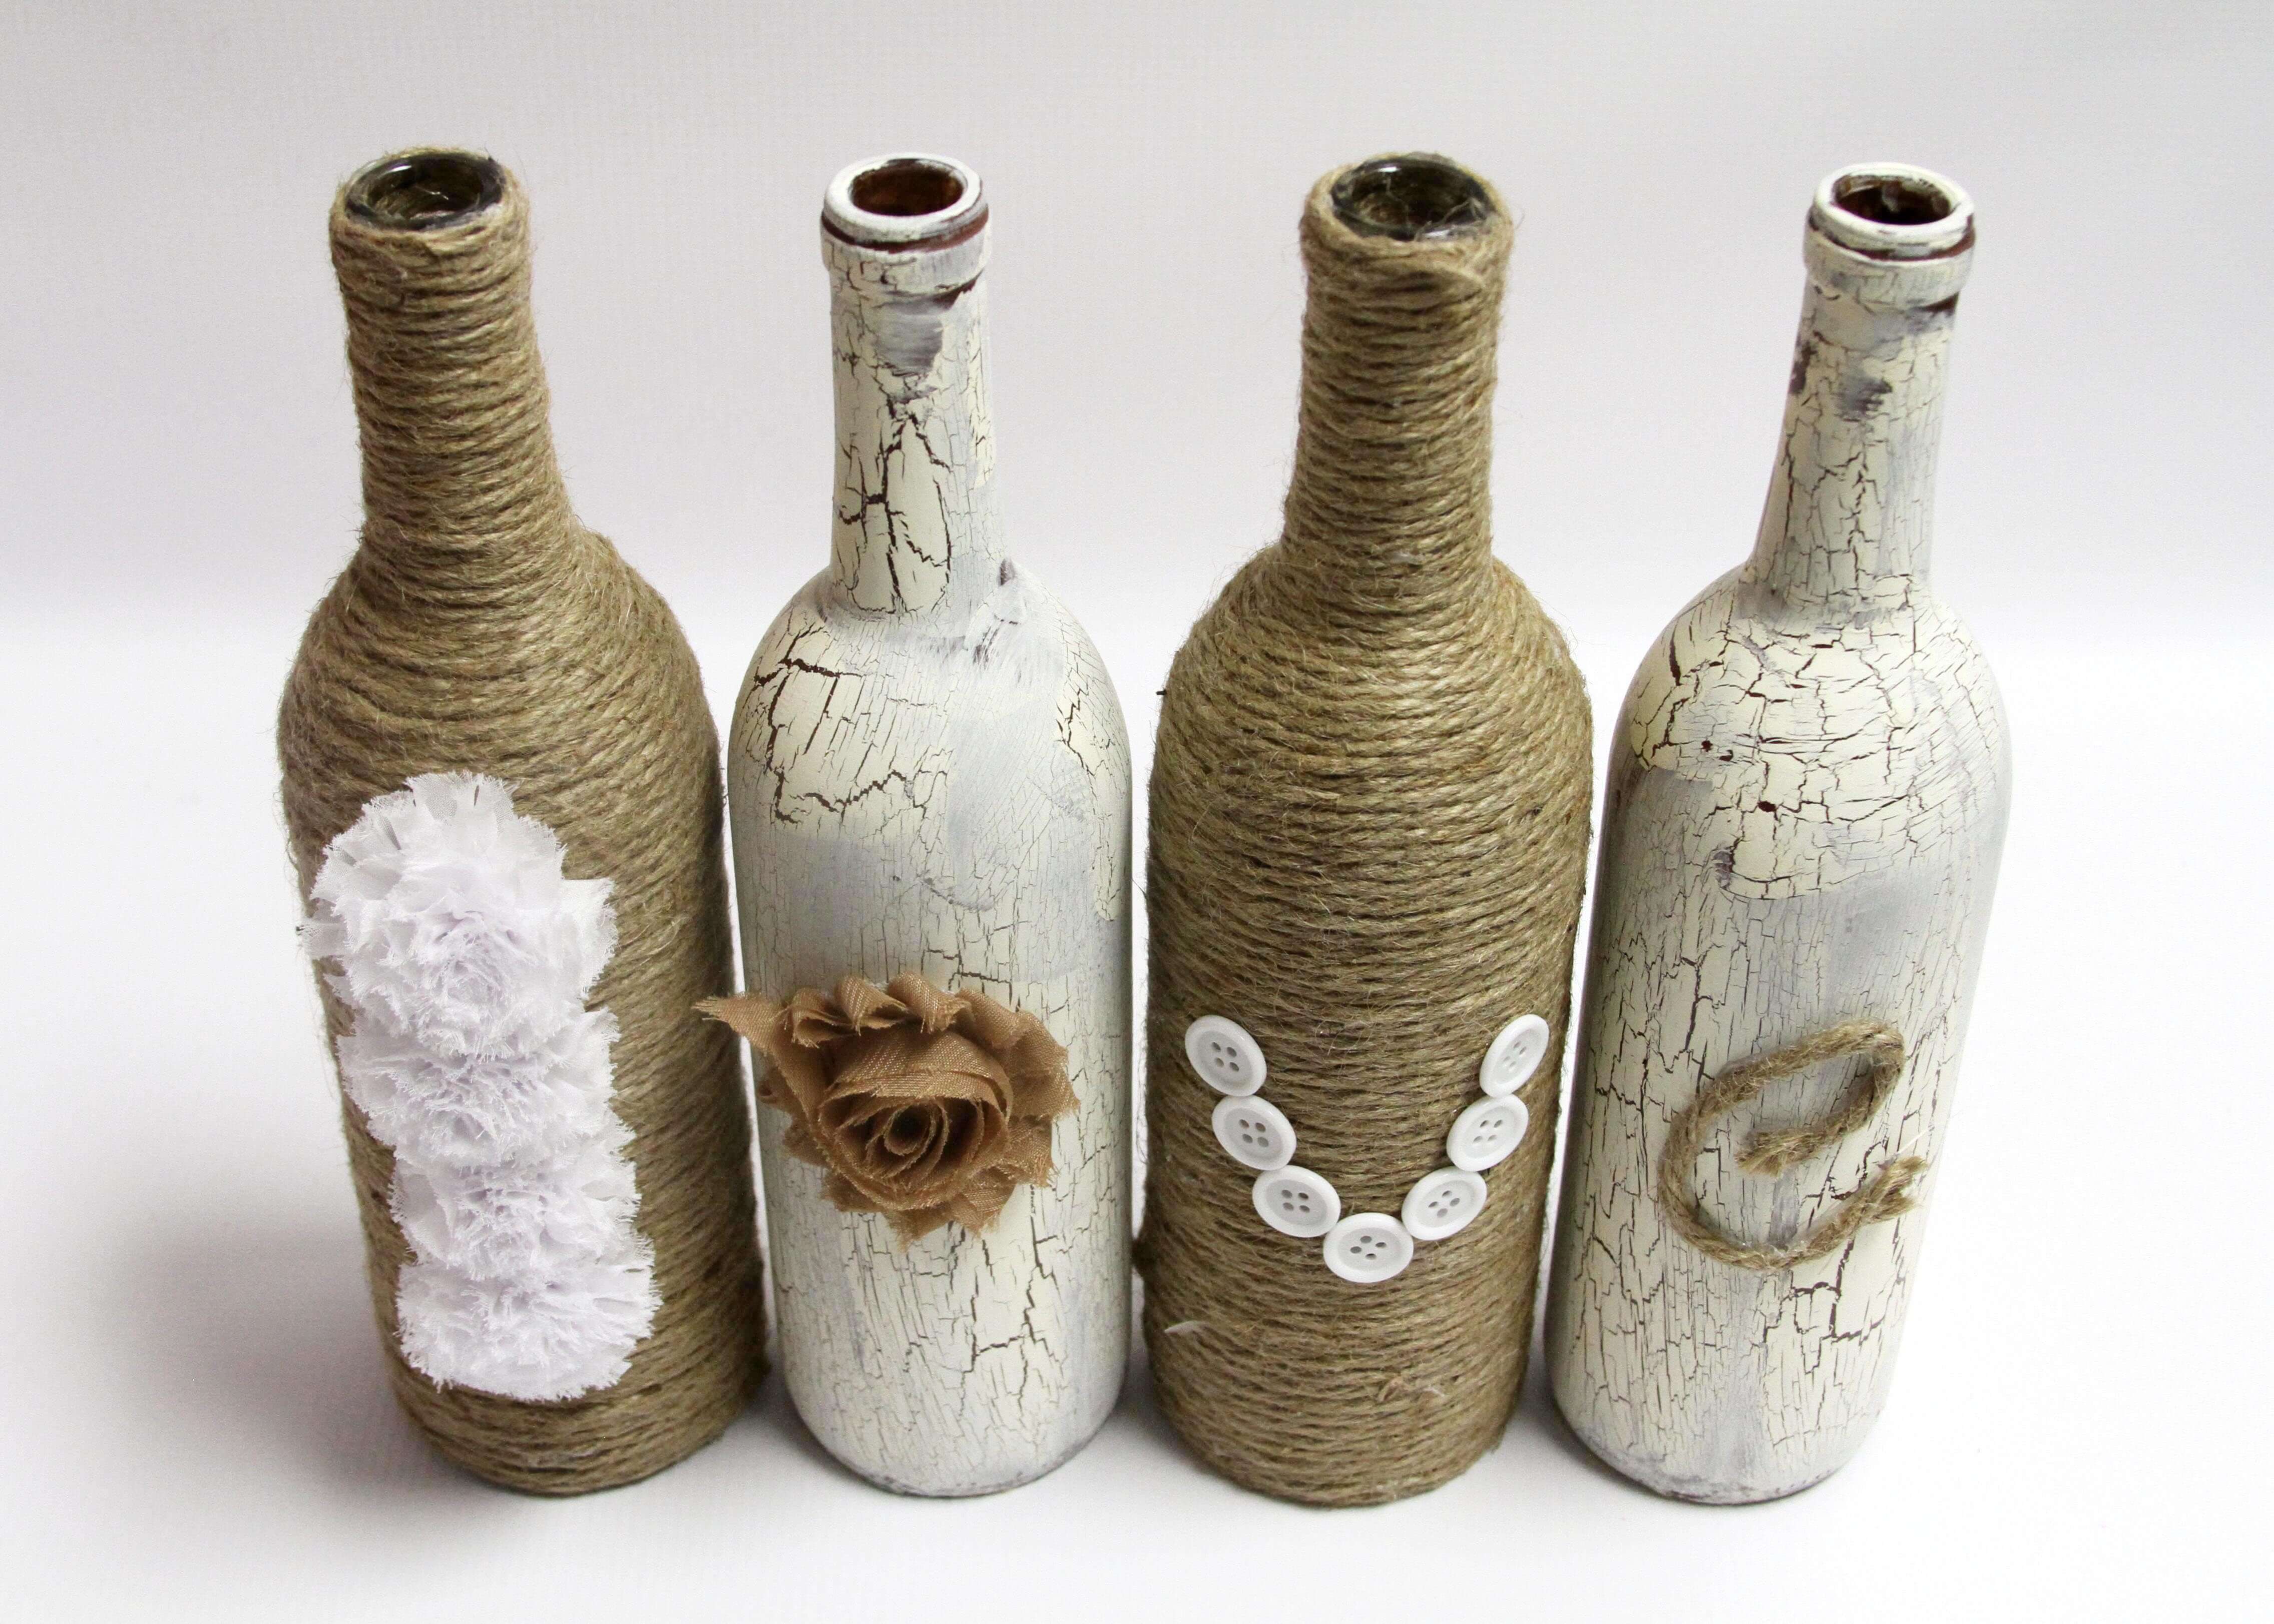  Diy Wine Bottle Crafts